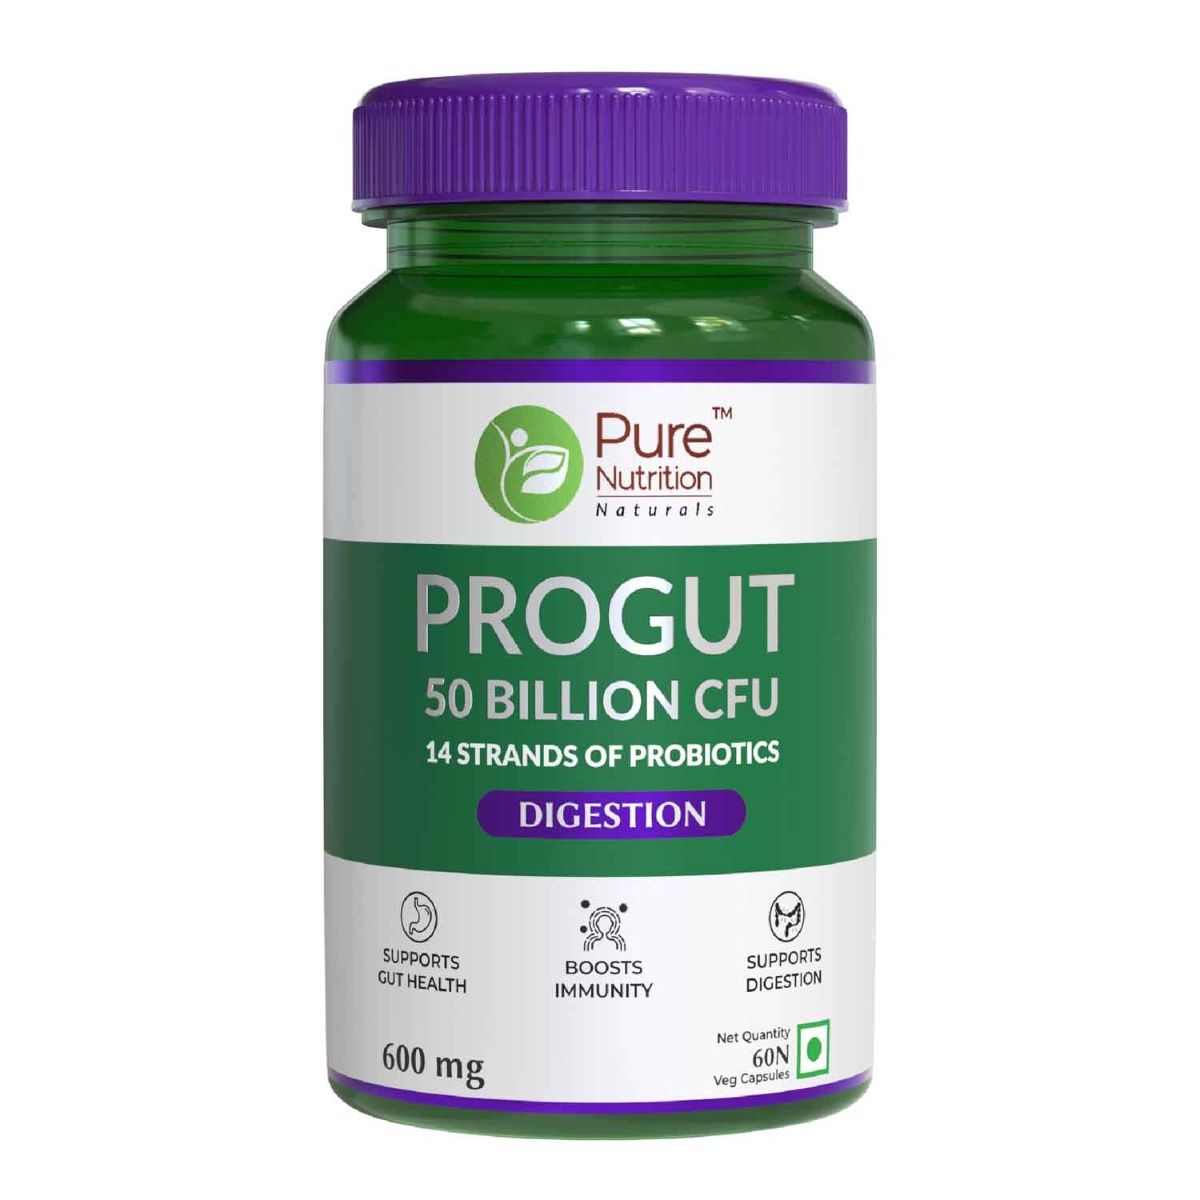 Pure Nutrition Progut 50 Billion CFU 600 mg, 60 Capsules, Pack of 1 